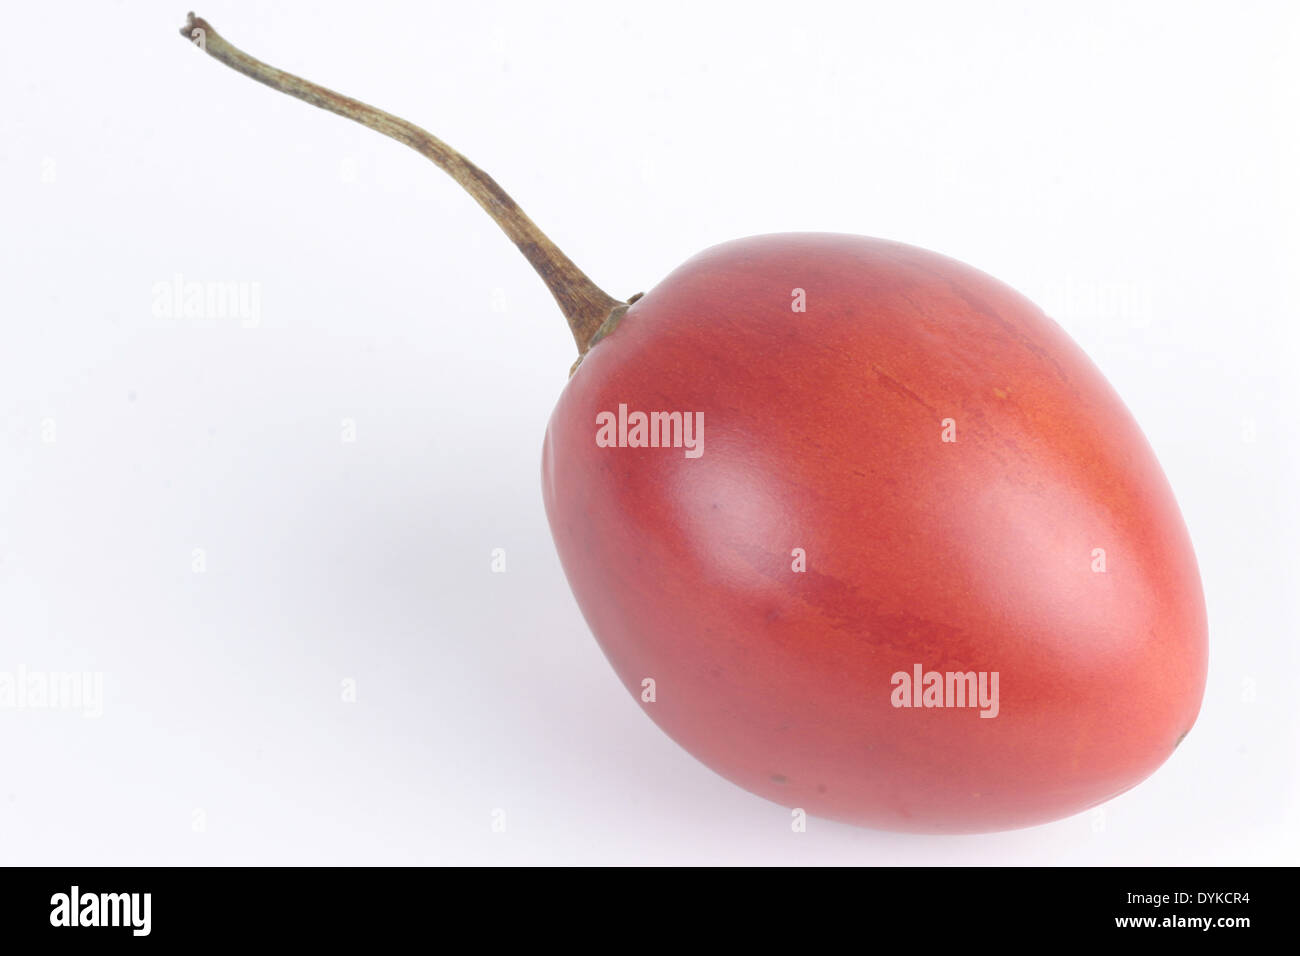 Tamarillo, Baumtomate, Cyphomandra crassicaulis, tree tomato, Baumtomate (Cyphomandra crassicaulis), Verbreitung: Suedamerika. | Stock Photo